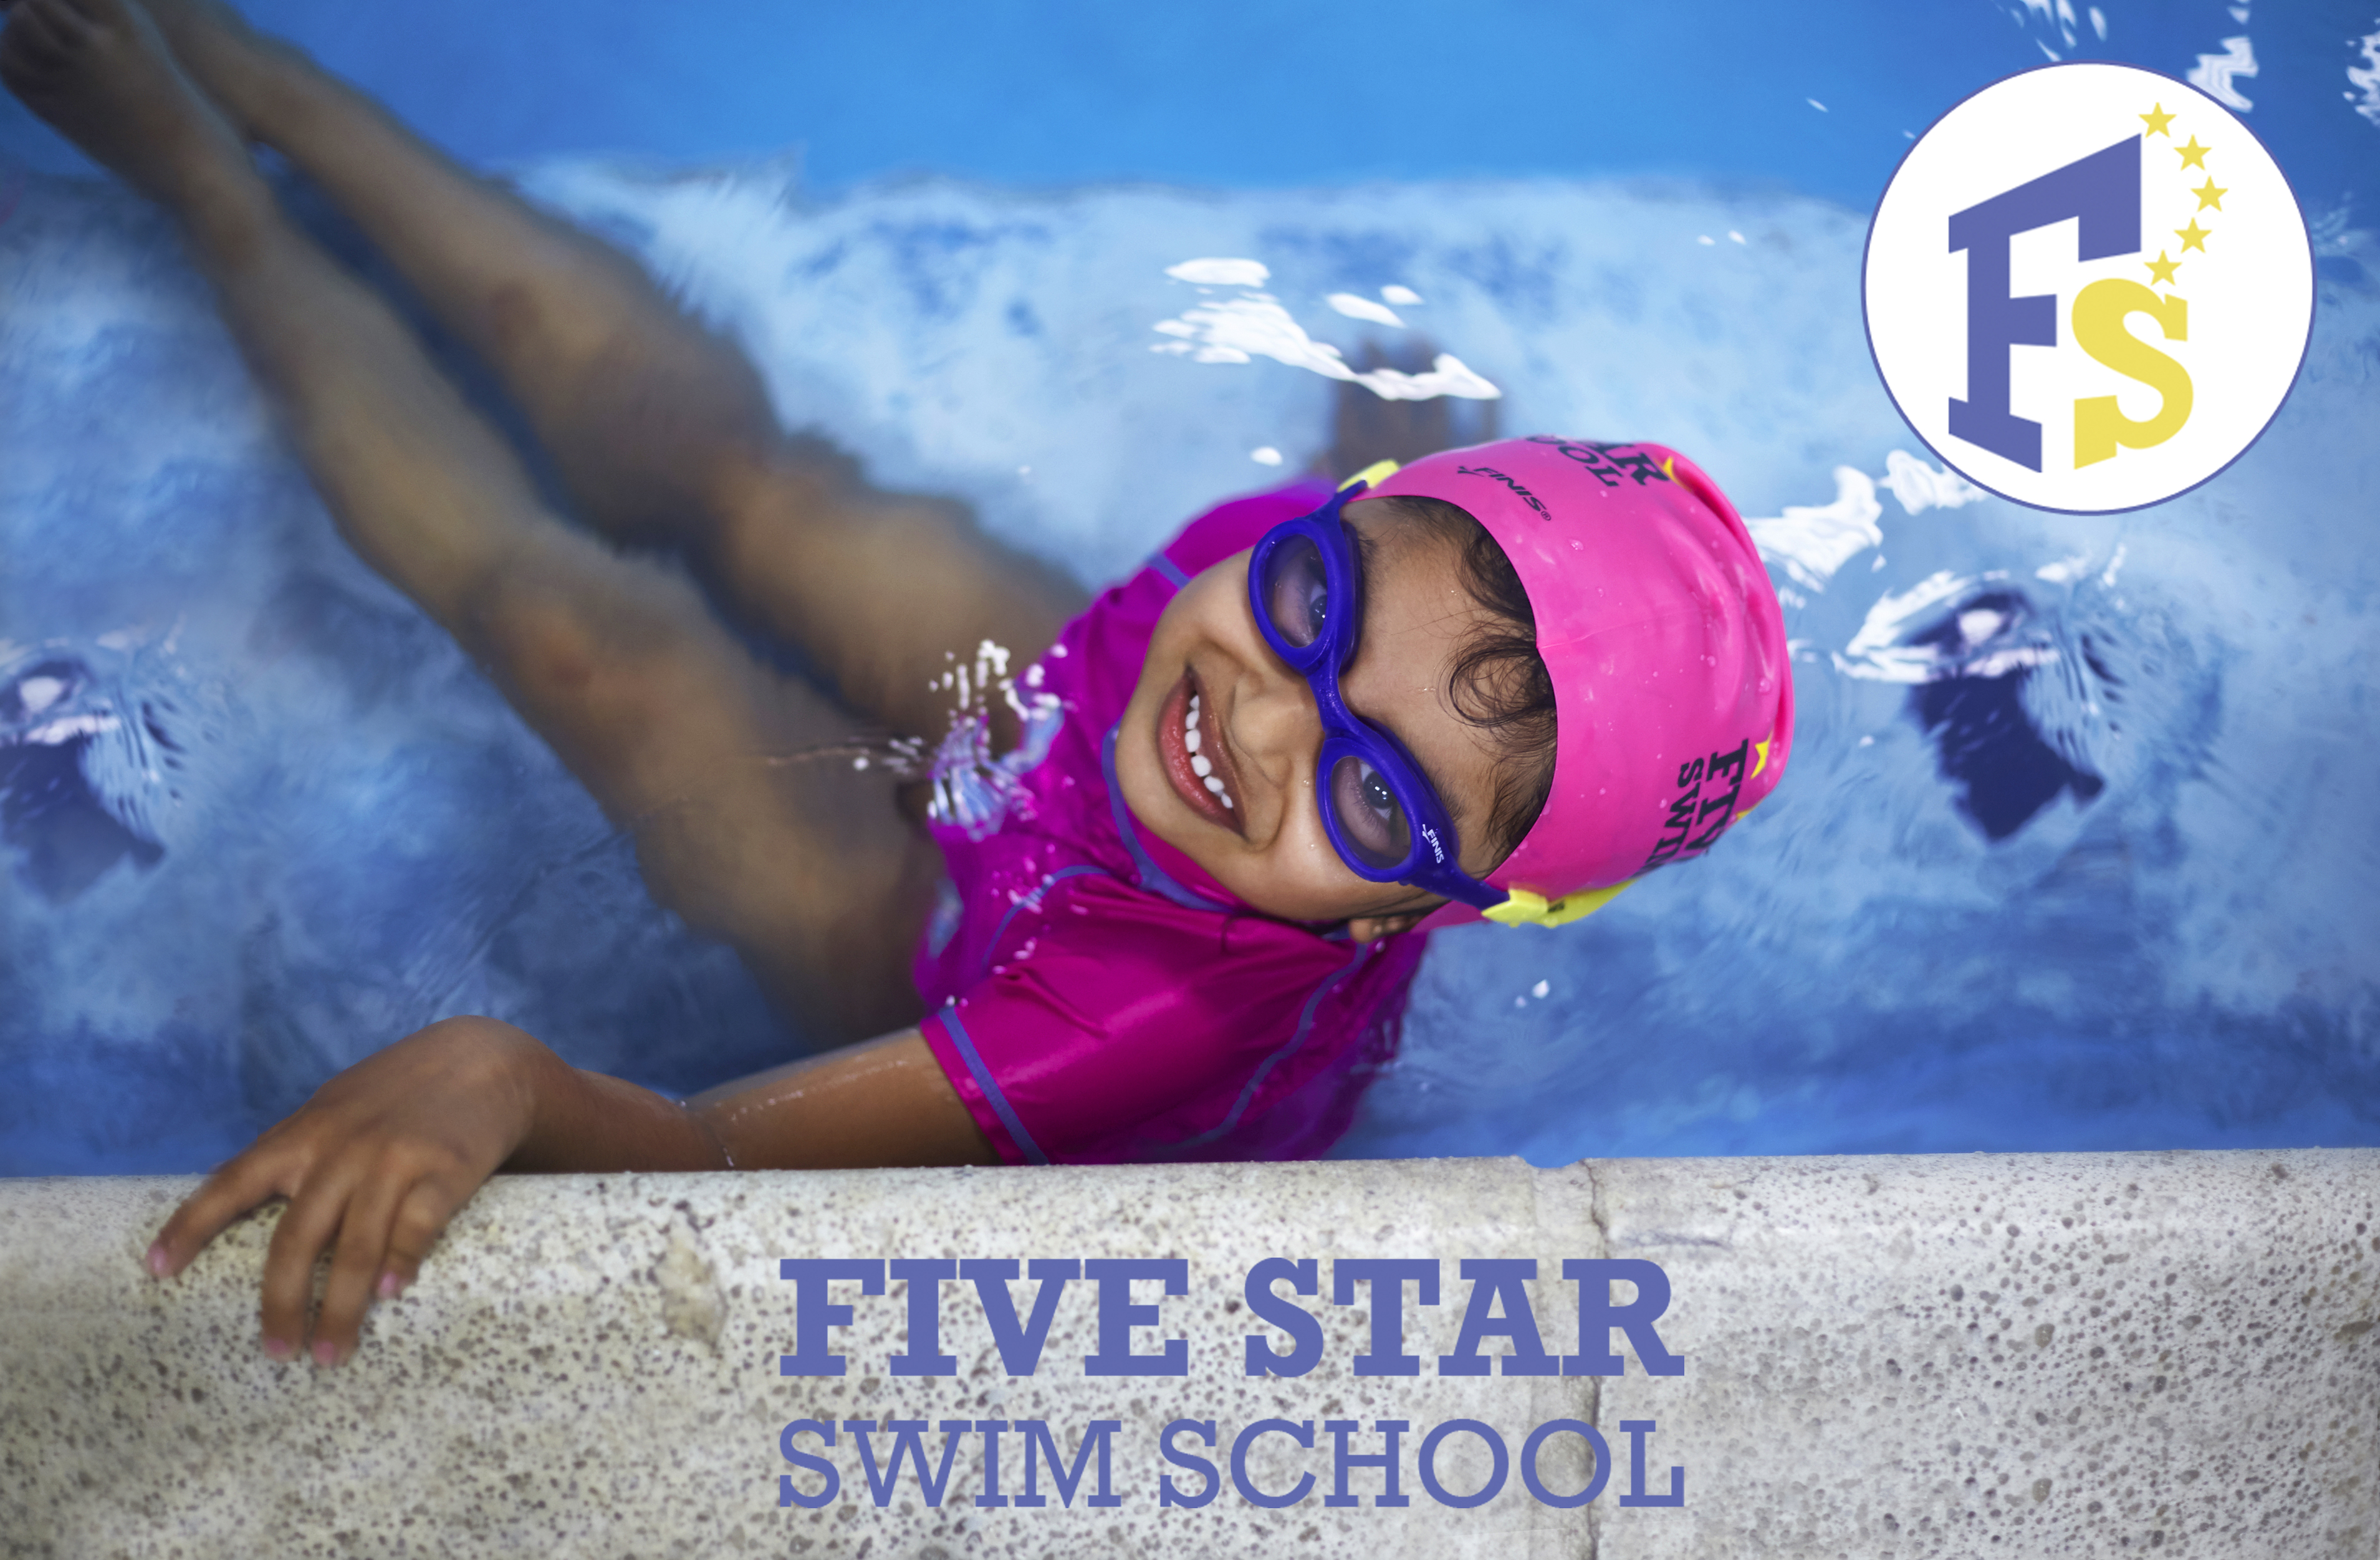 Five Star Swim School